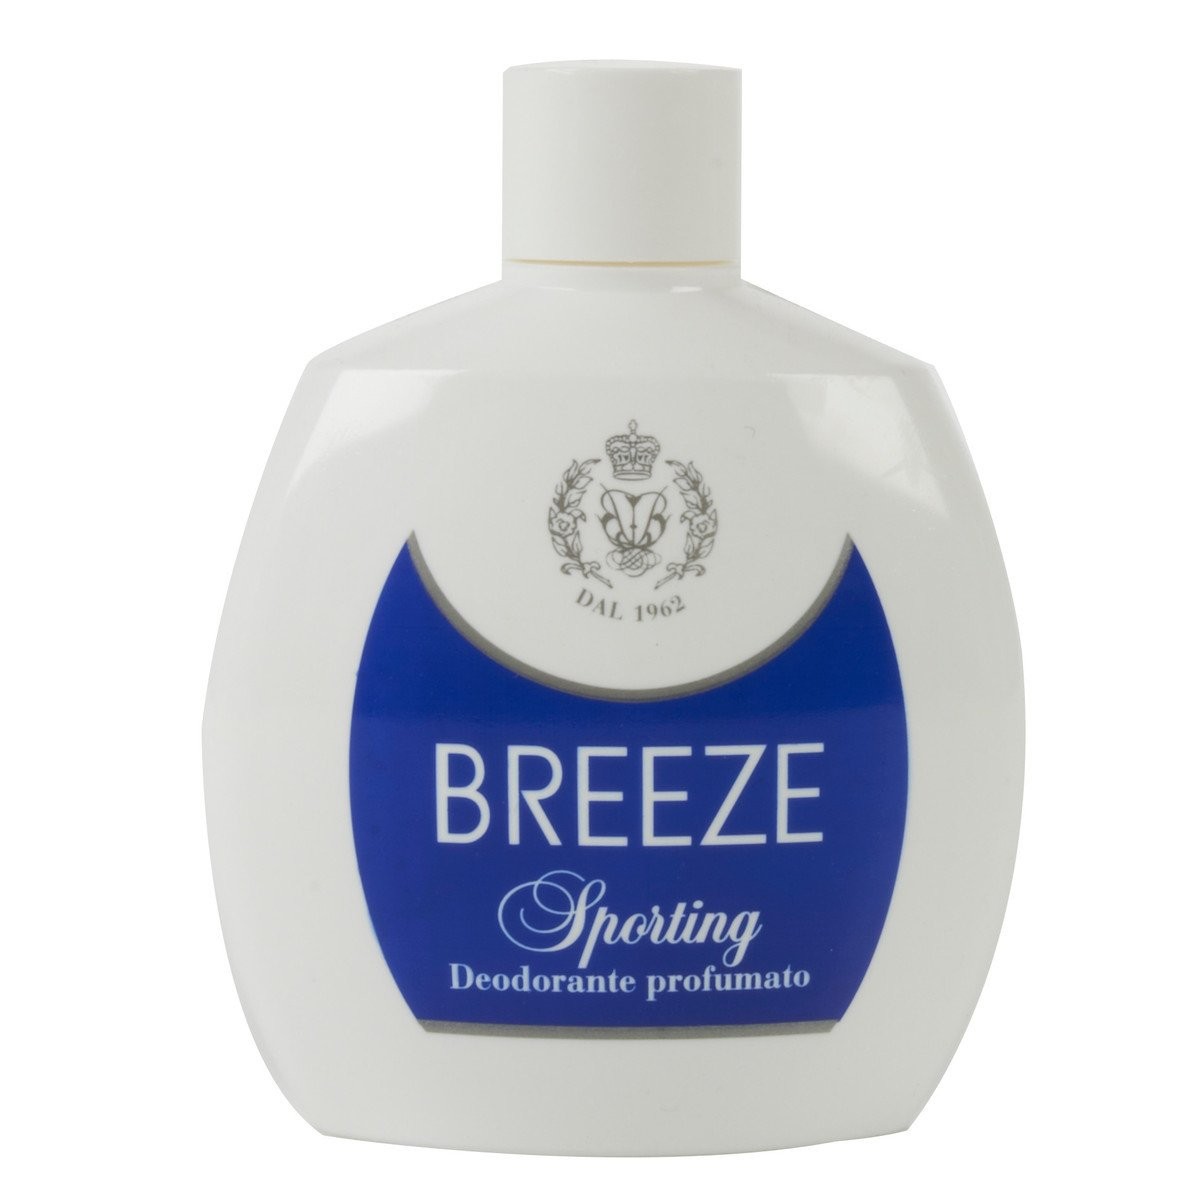 Breeze Deodorante squeeze Sporting